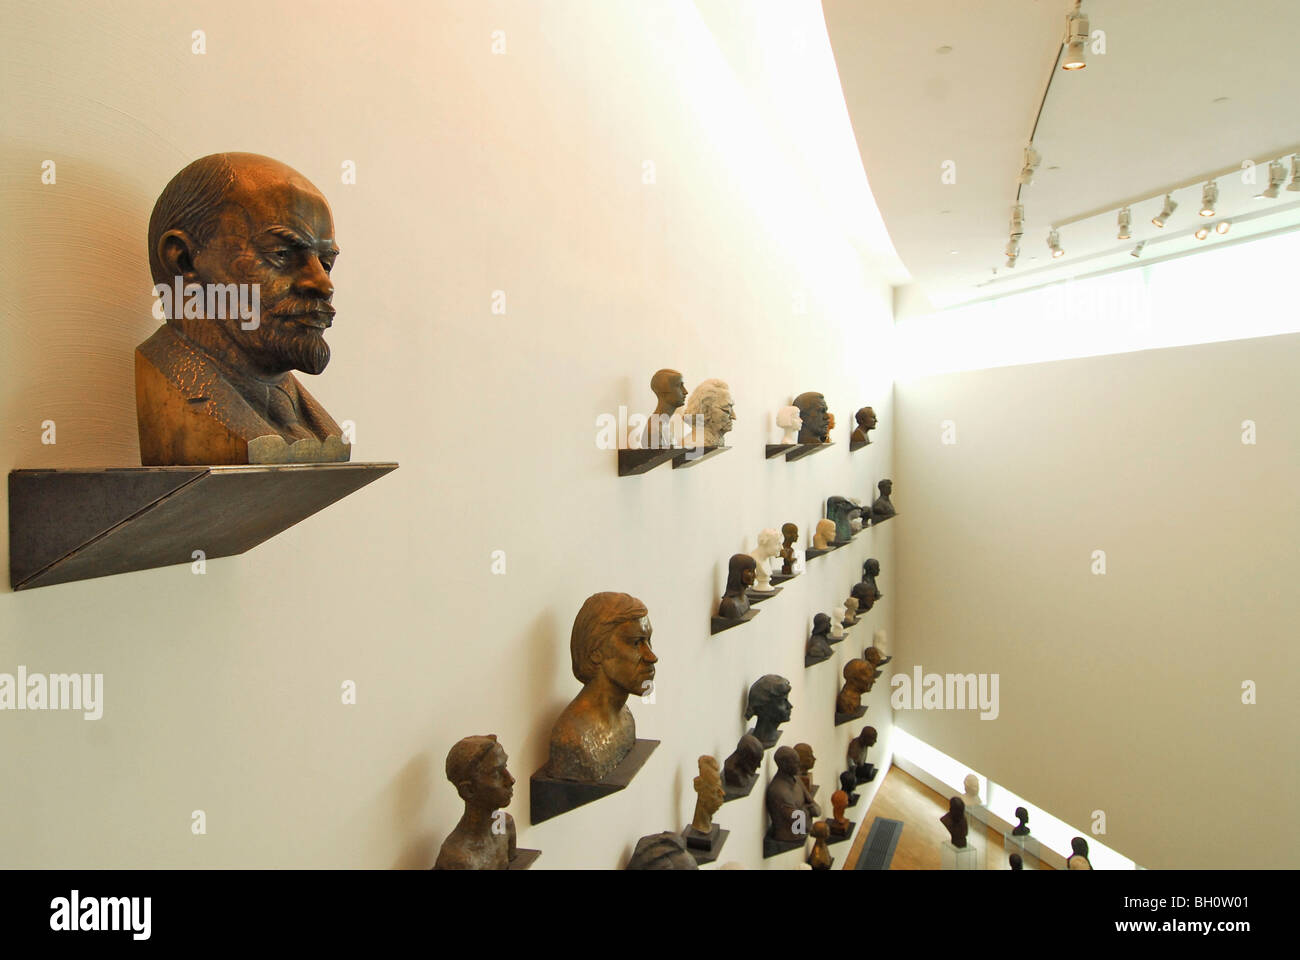 Lenin e altri busti in KUMU Art Museum, esposizione e architettura moderna, Kadriorg, Tallinn, Estonia Foto Stock